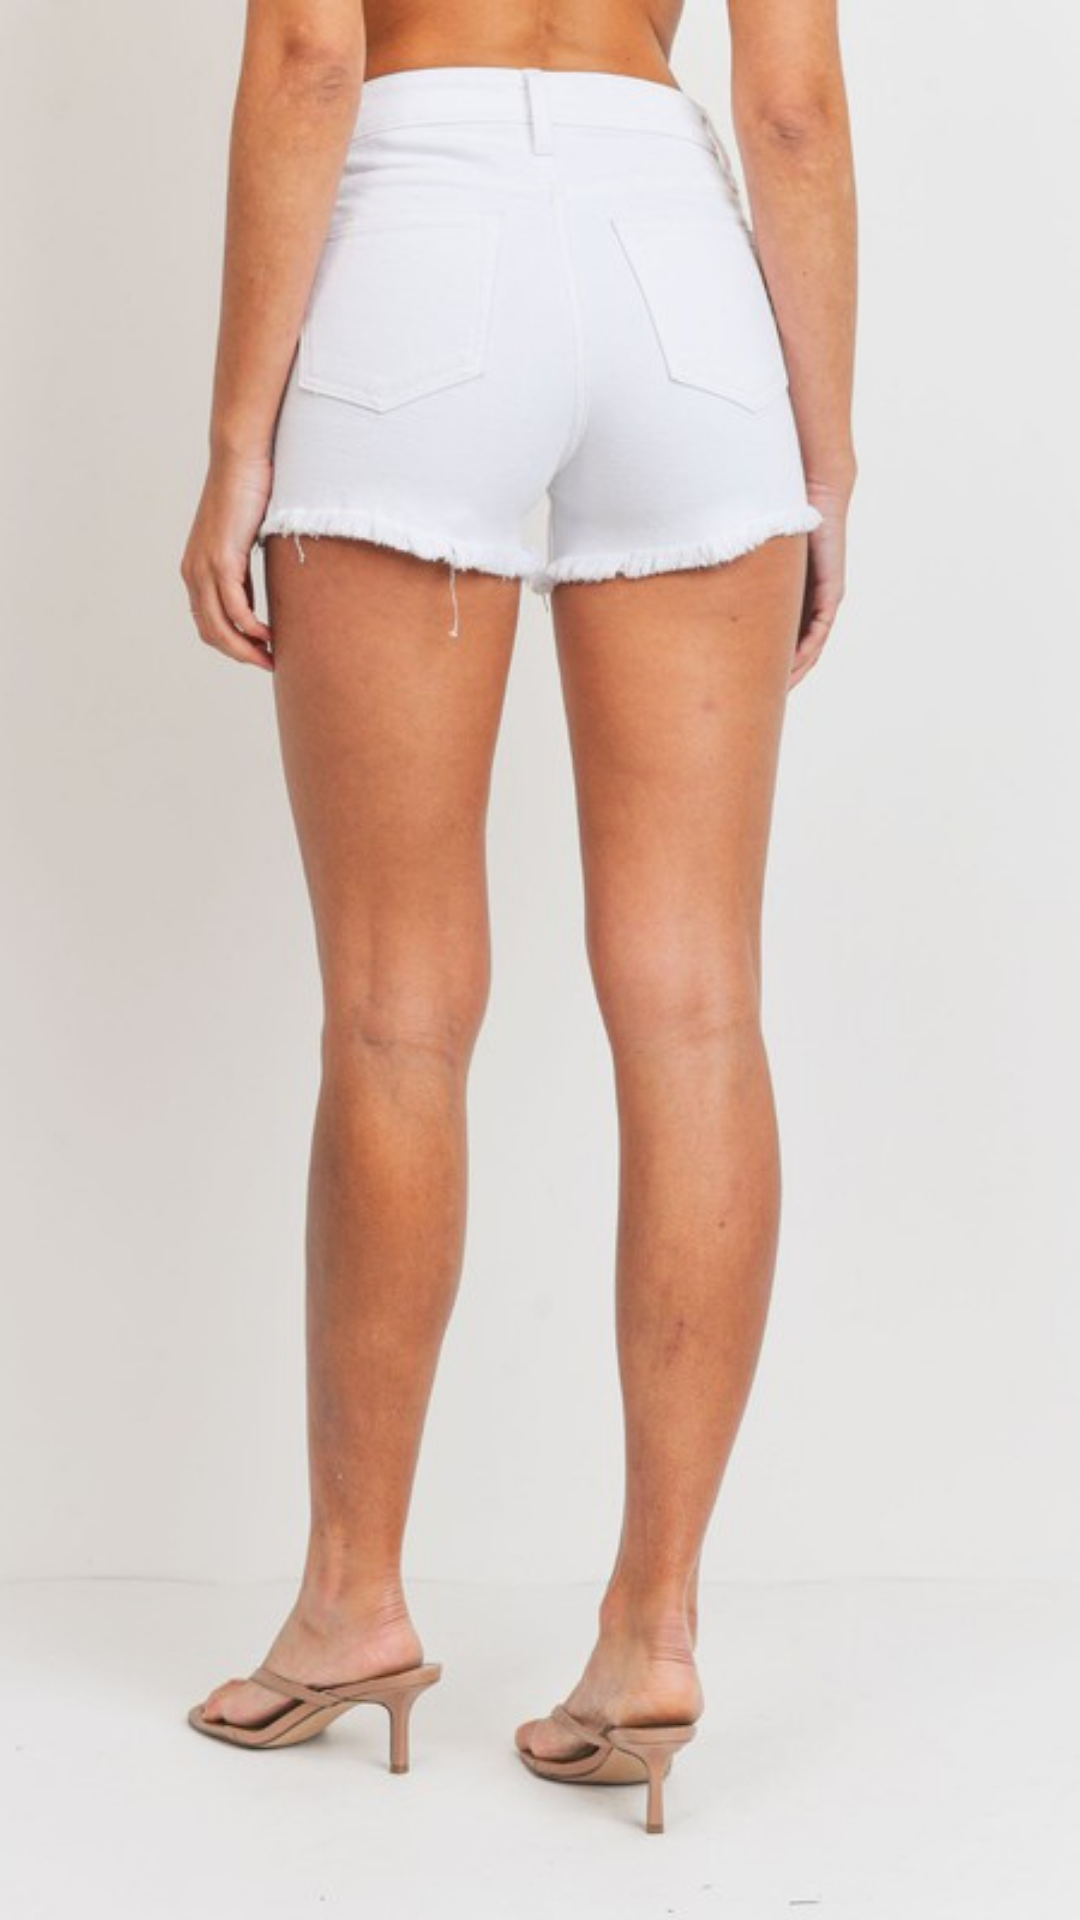 White High Rise Jean Shorts